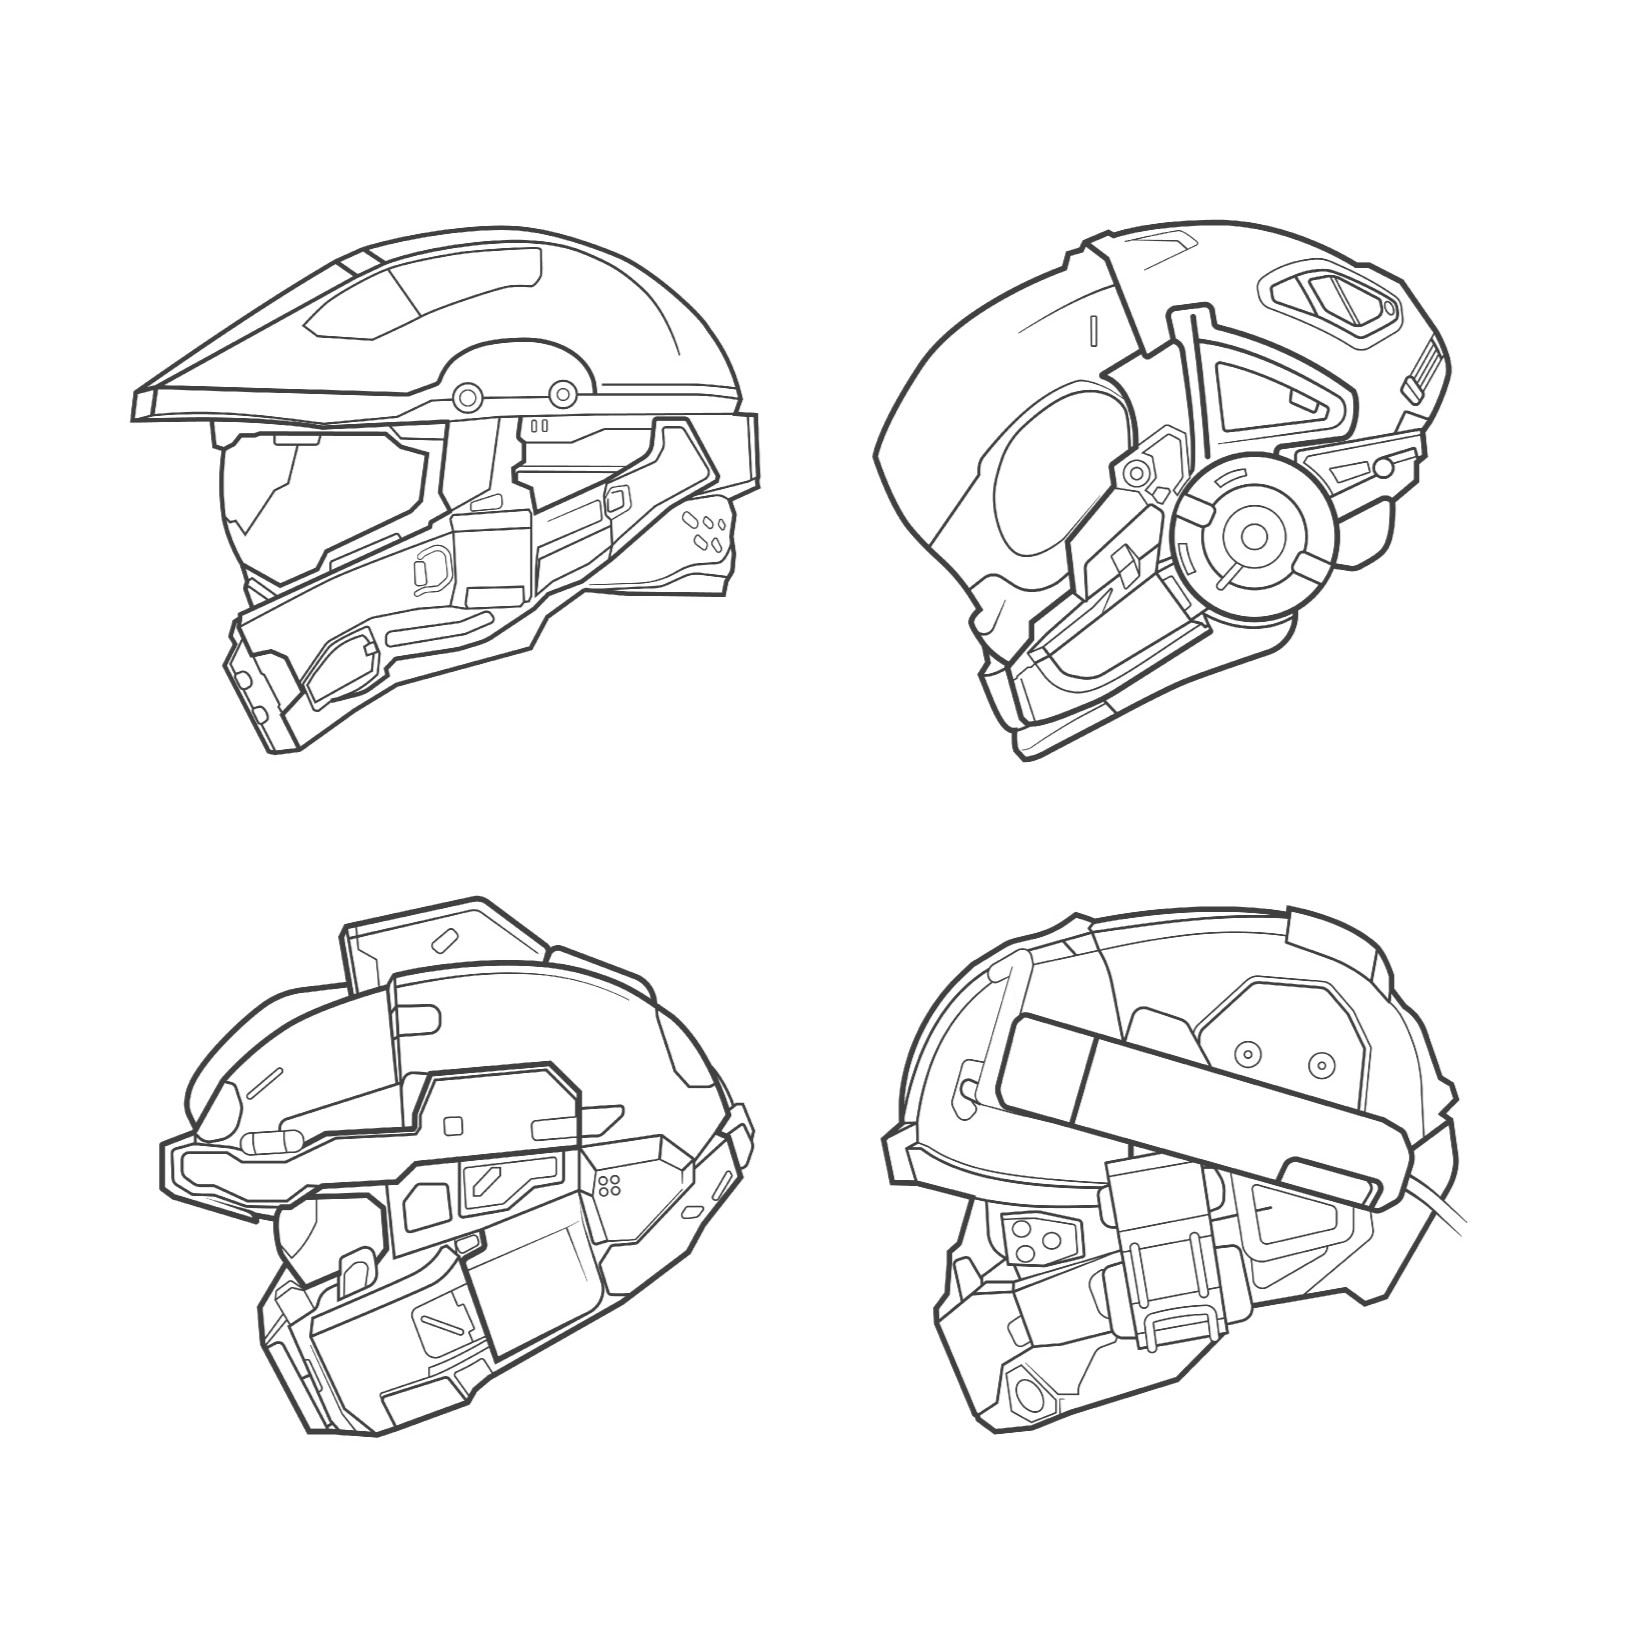 halo spartan helmet clip art